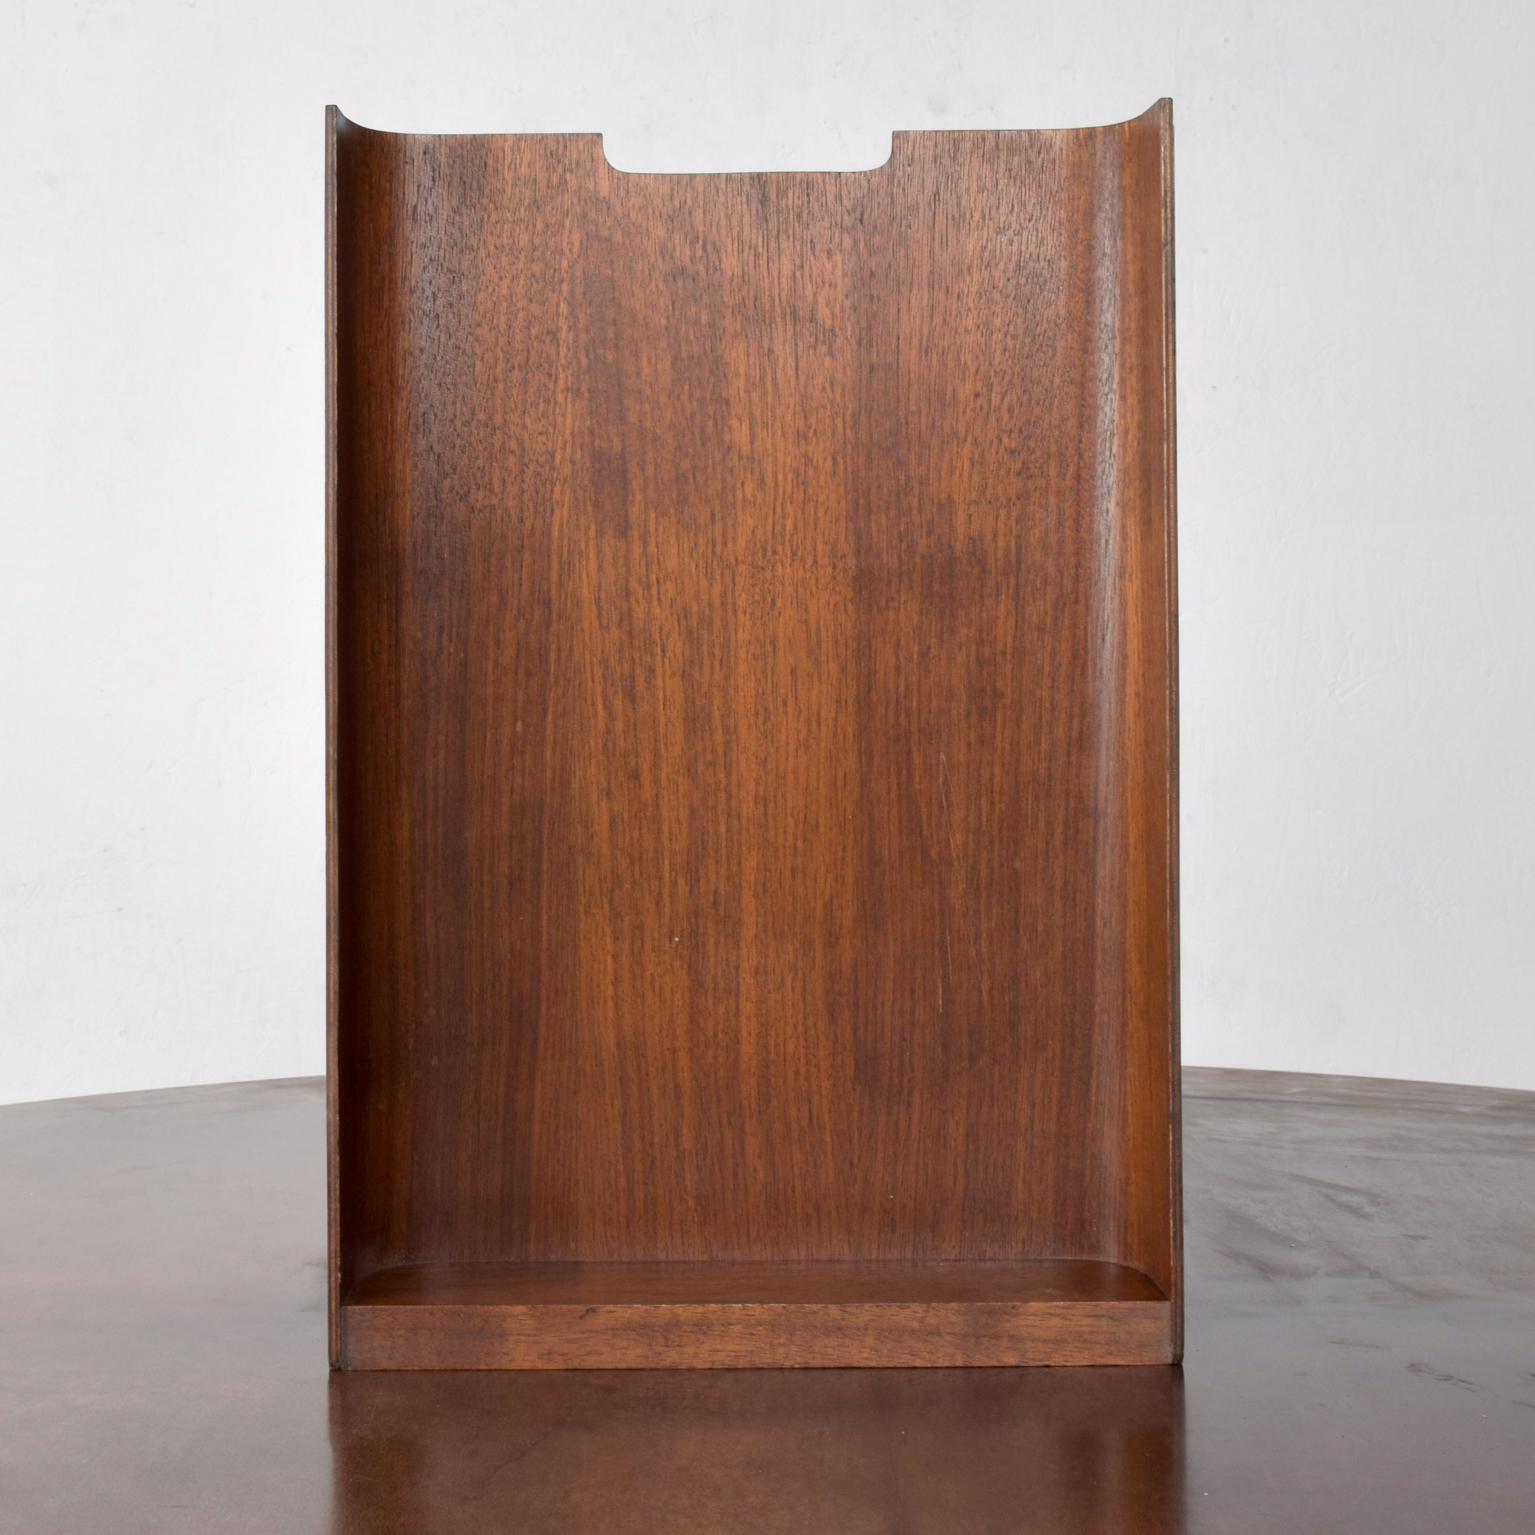 American Mid-Century Modern Bent Plywood Office Desk Paper Holder Tray in Walnut